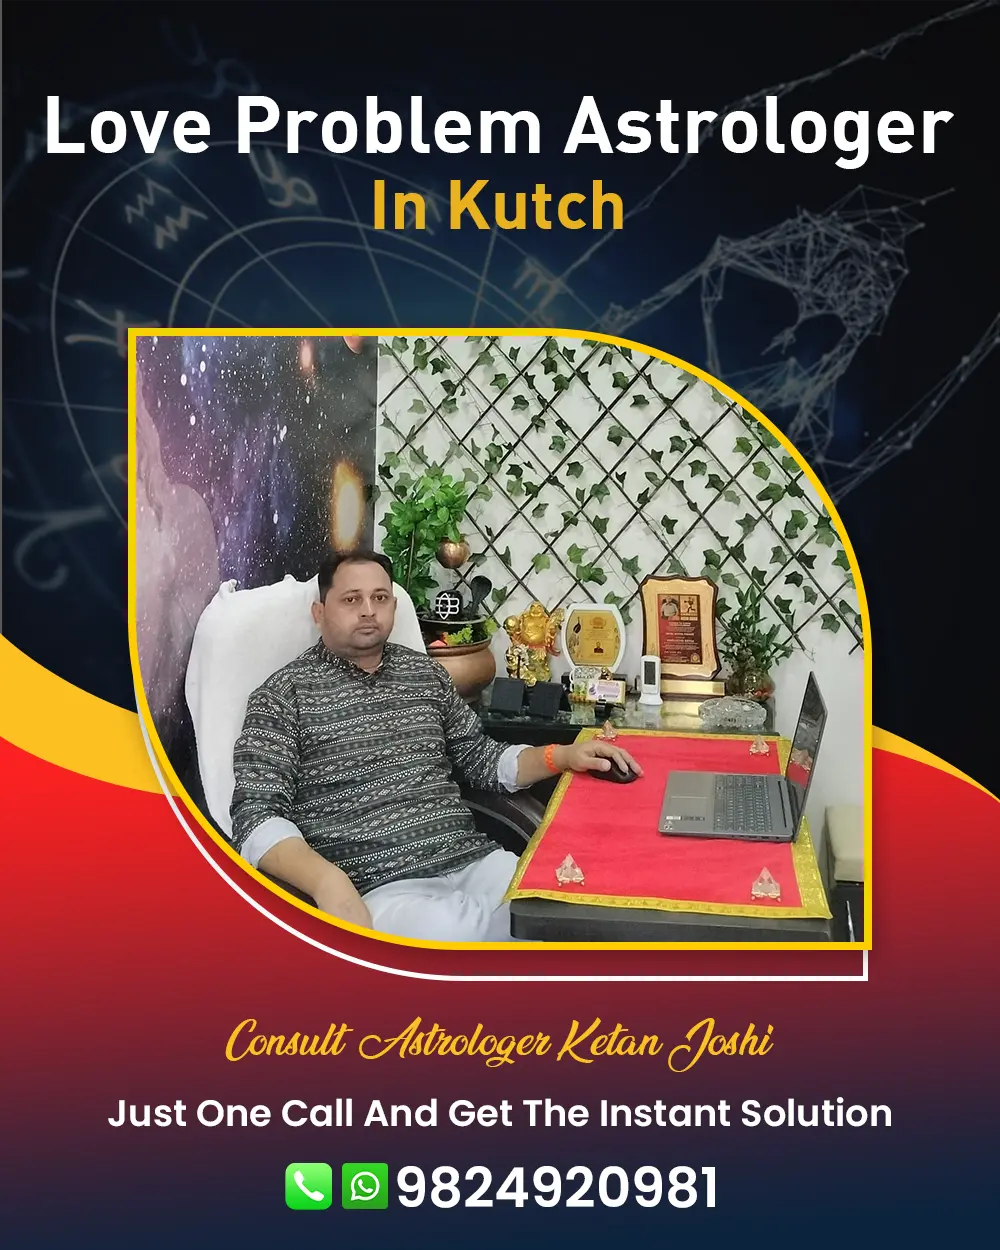 Love Problem Astrologer In Kutch